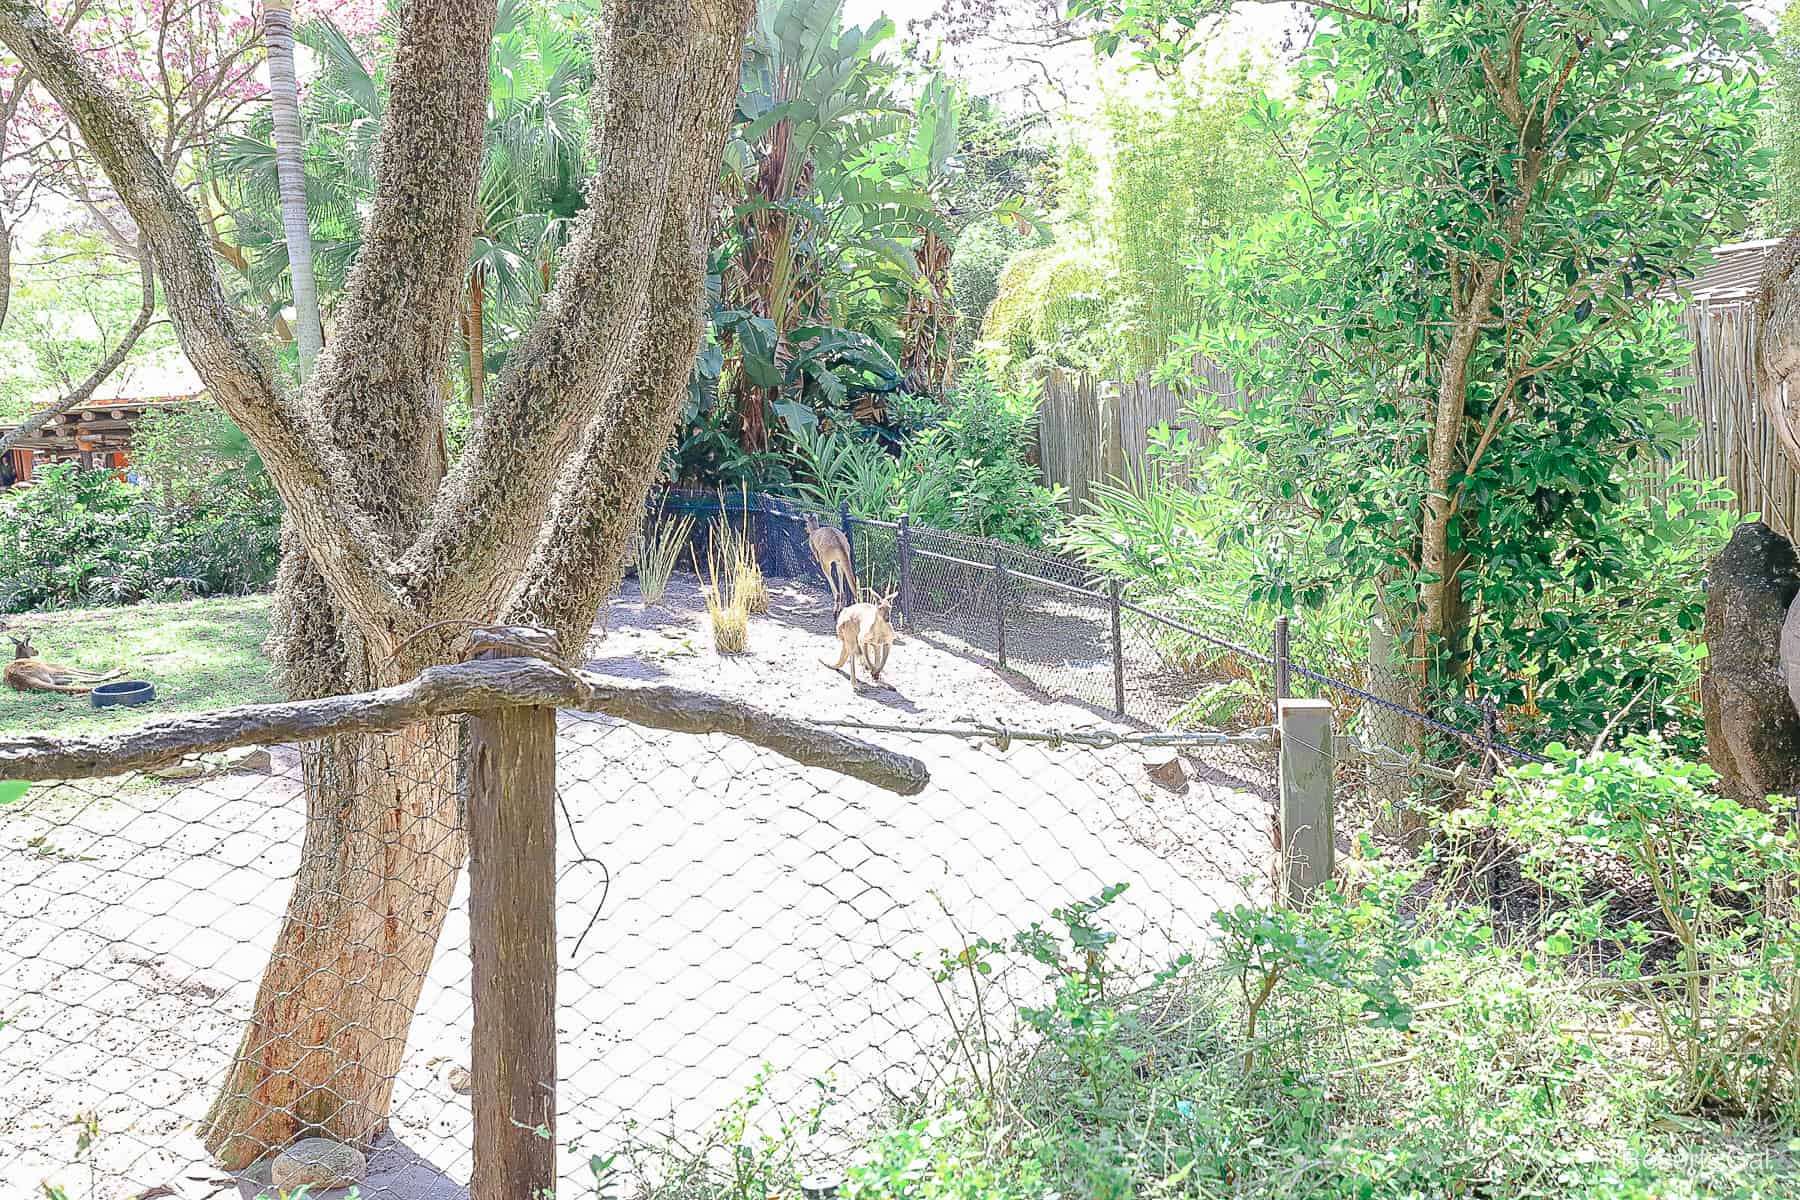 a red kangaroo sighting on the Discovery Island Trail at Disney's Animal Kingdom 